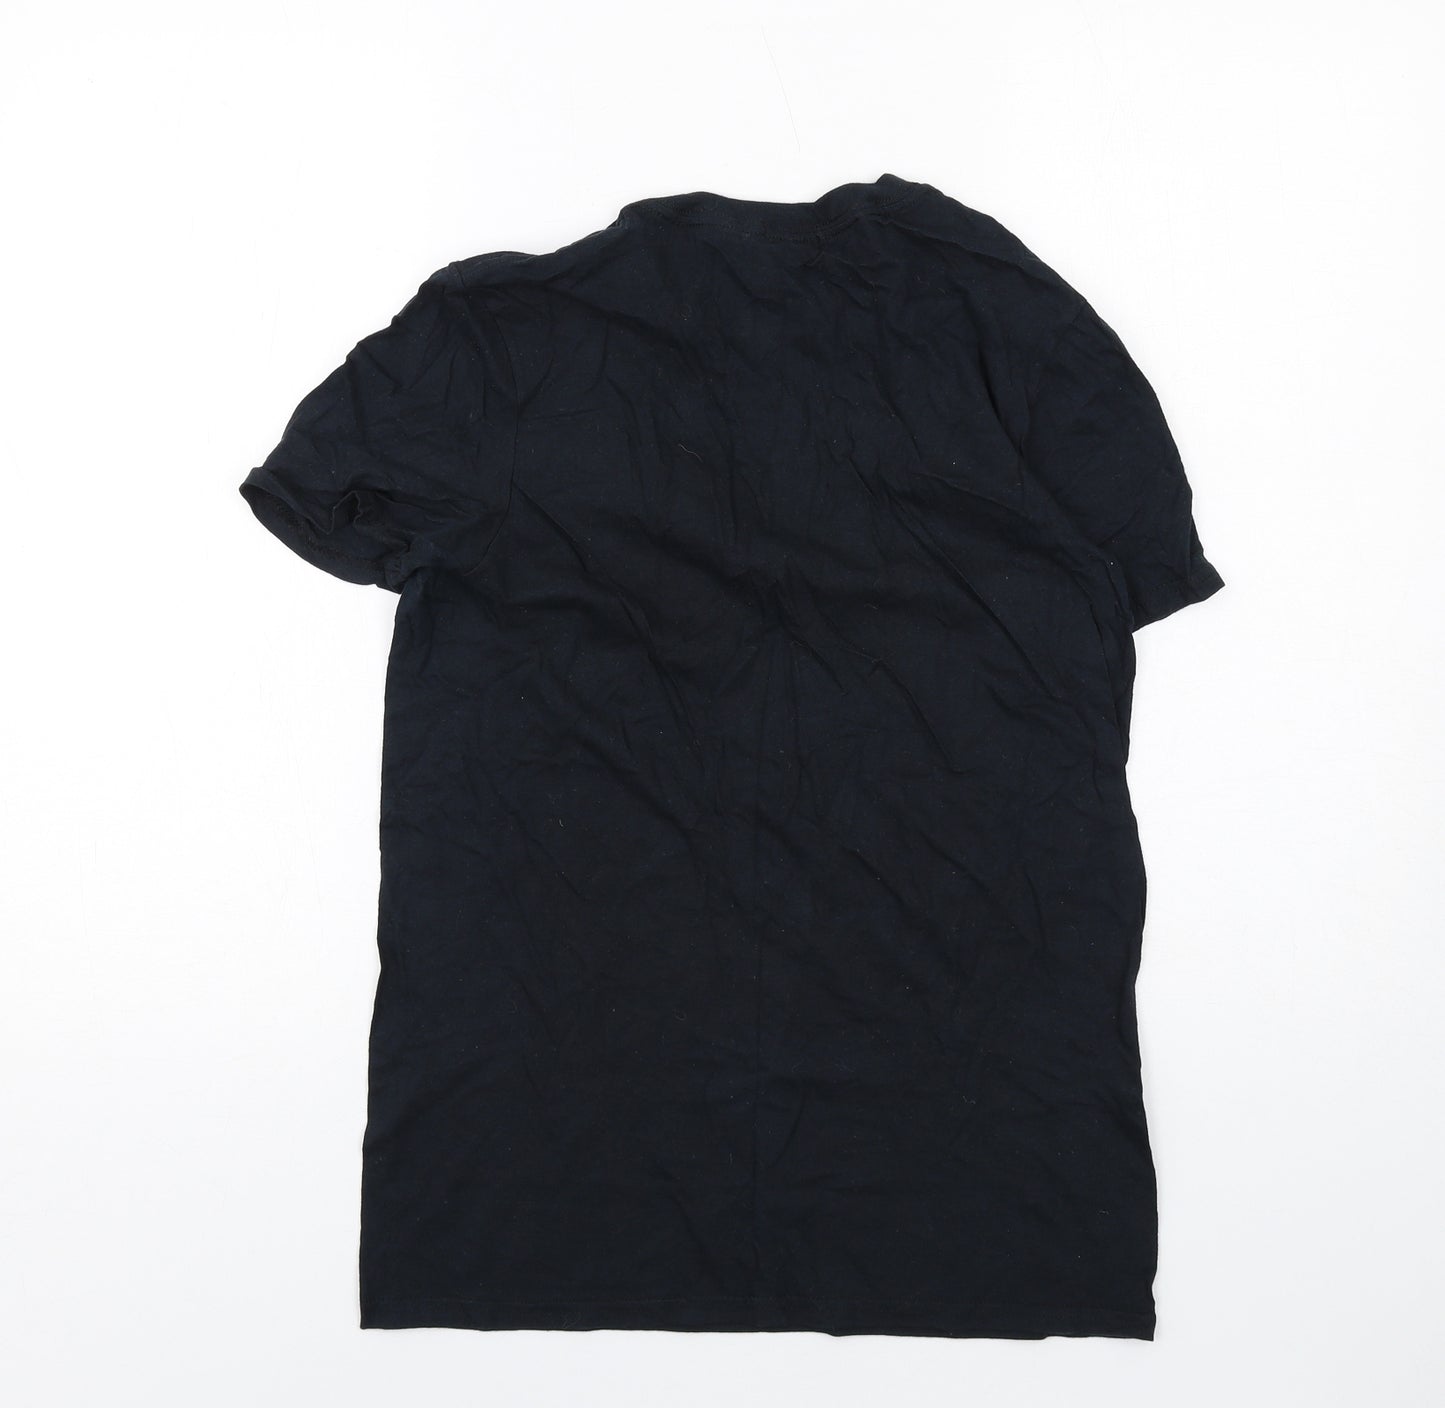 River Island Womens Black Cotton Basic T-Shirt Size 8 V-Neck